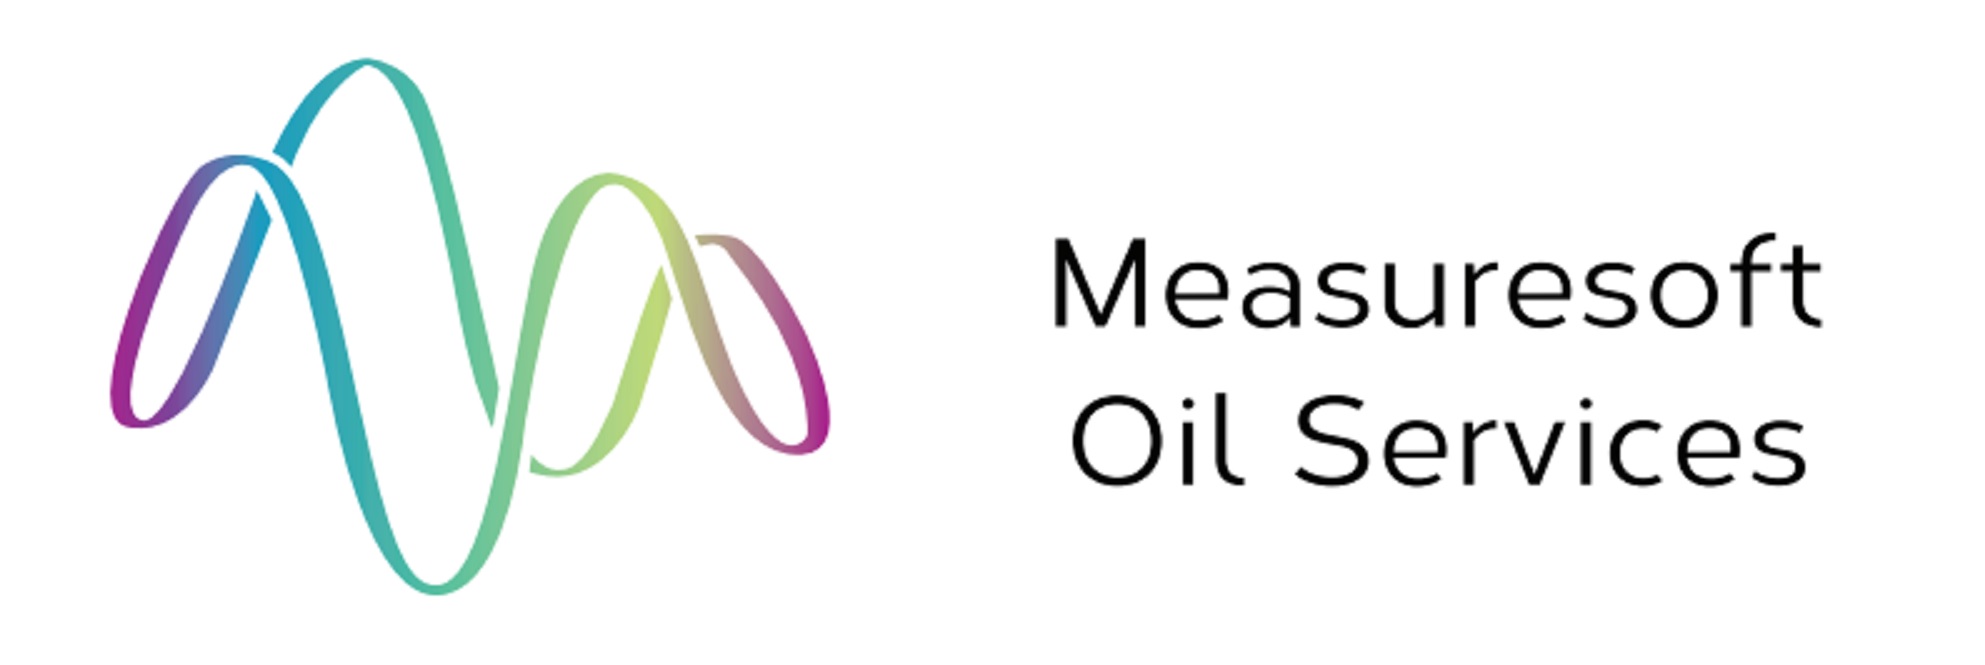 Measuresoft Oil Services